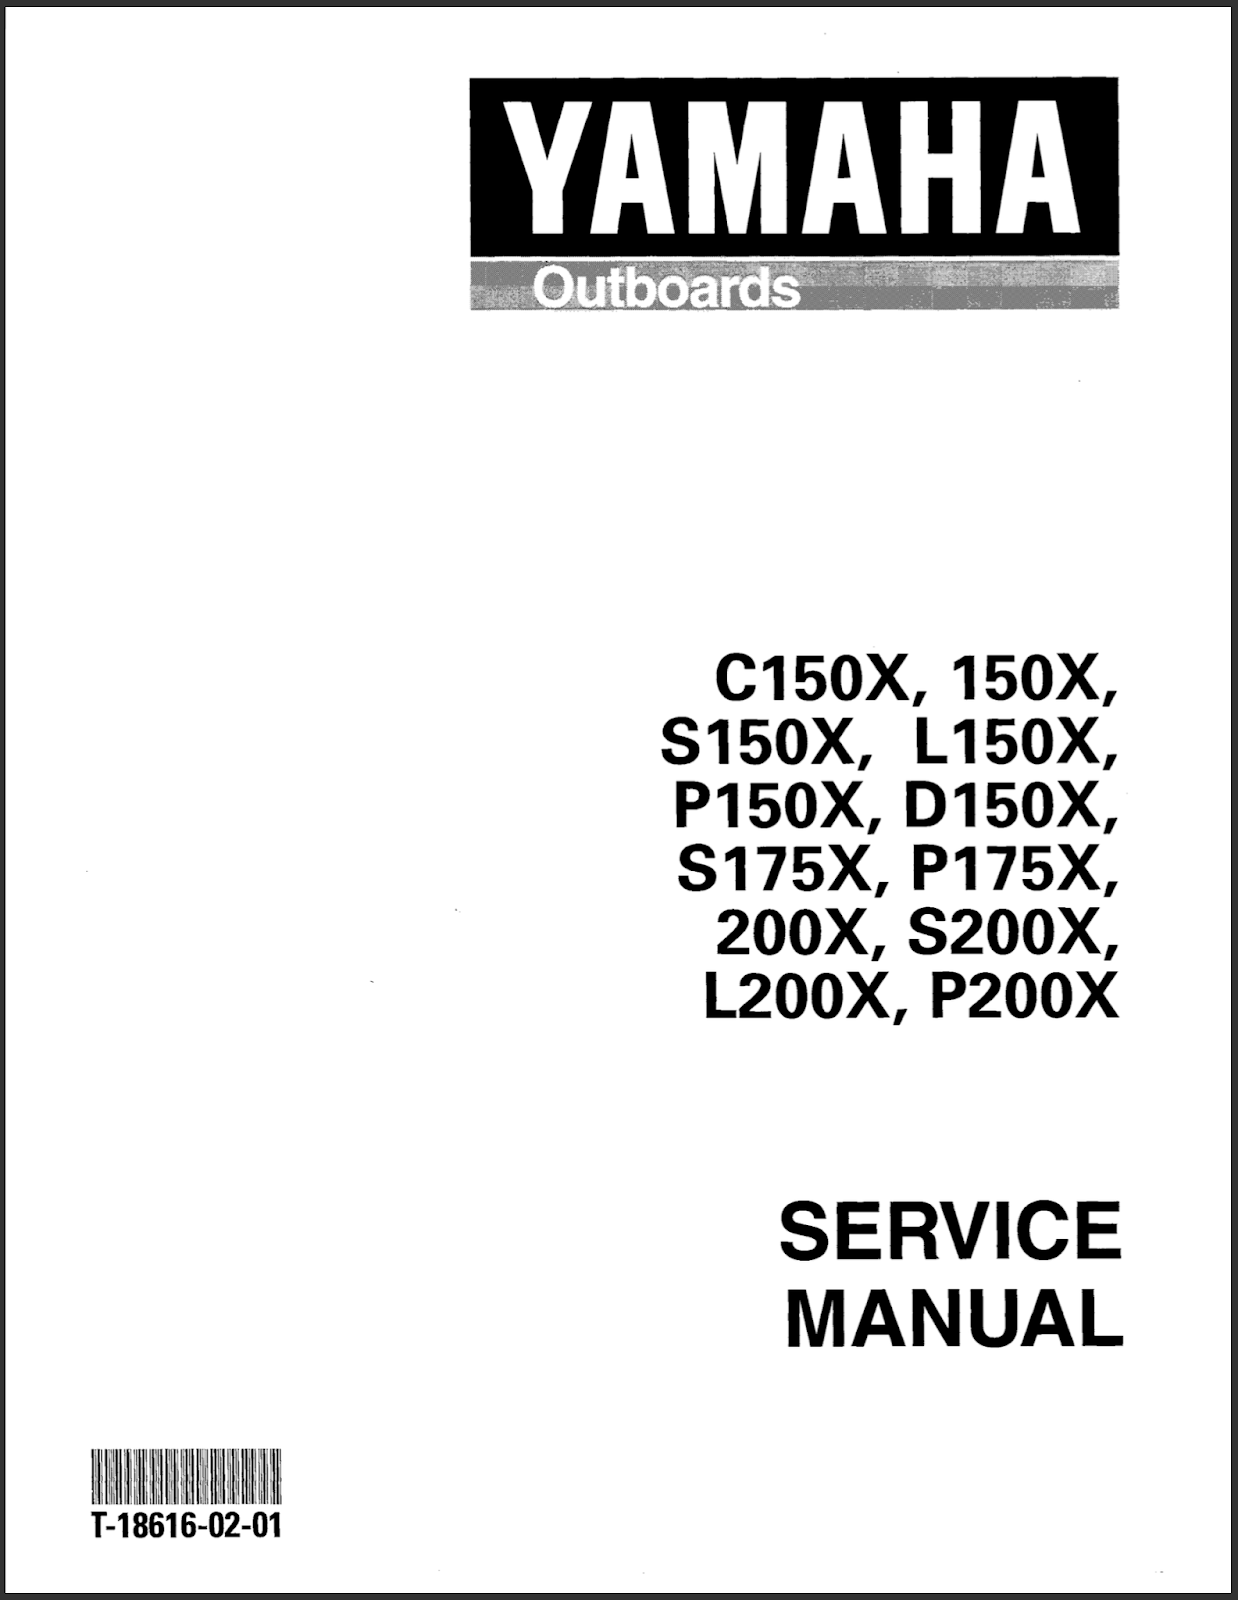 Yamaha Outboard Service Manual: DOWNLOAD Yamaha 150TXRY (150 TXRY